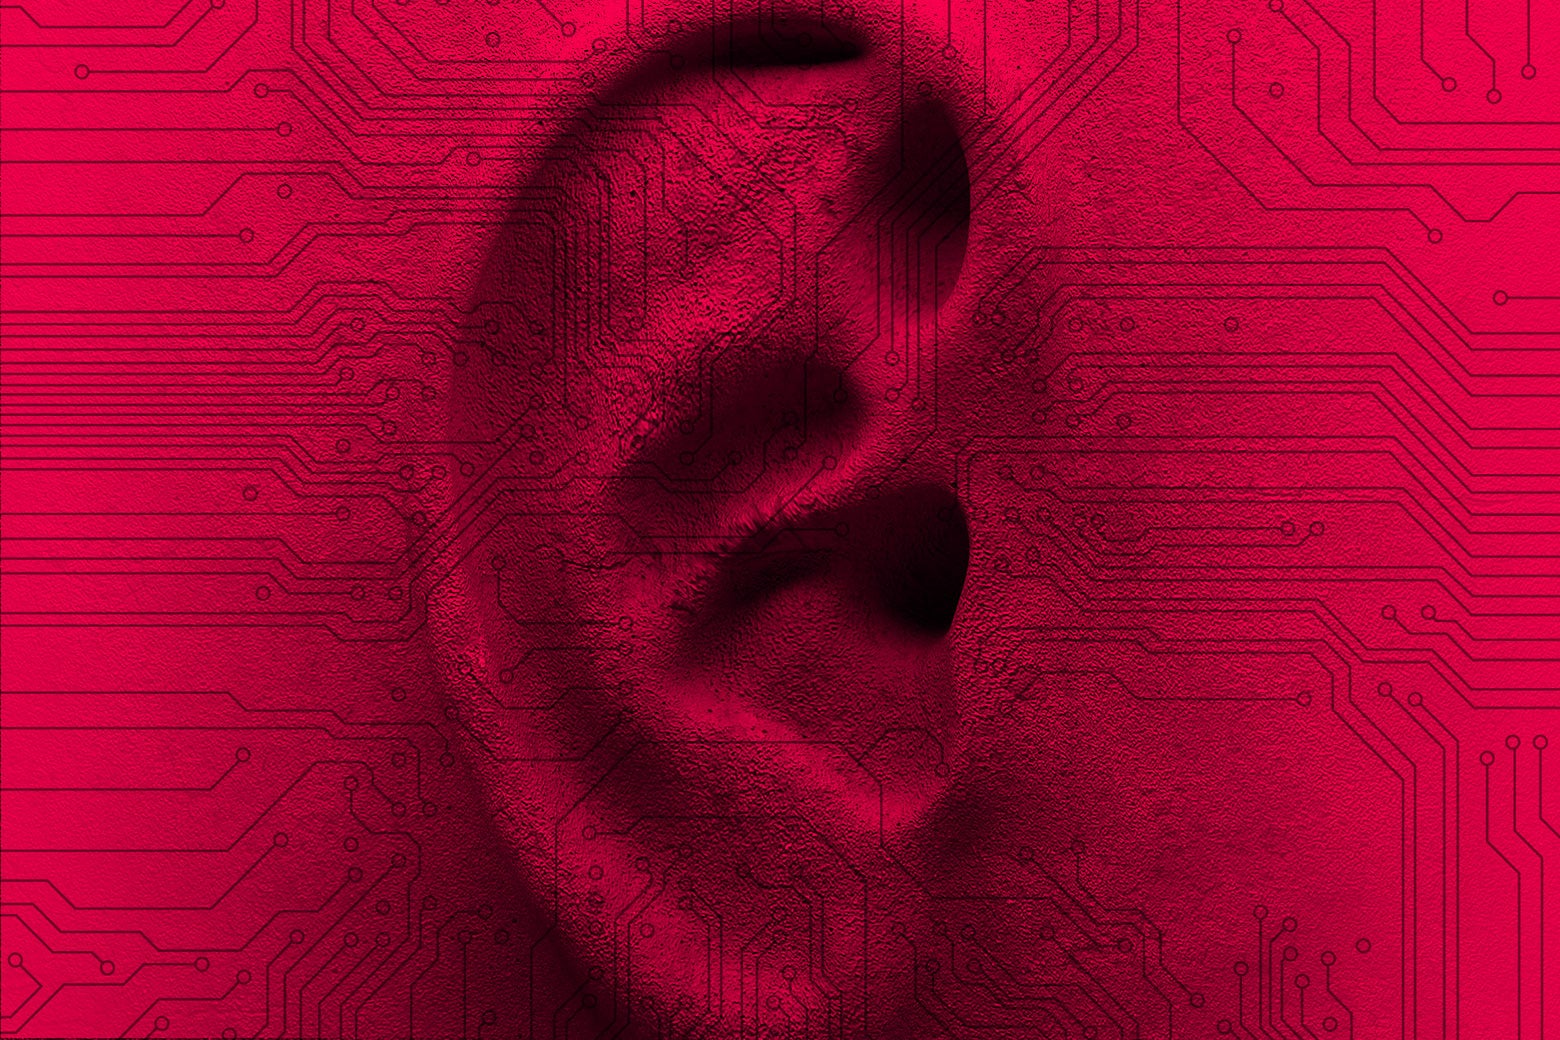 An ear with digital surveillance.